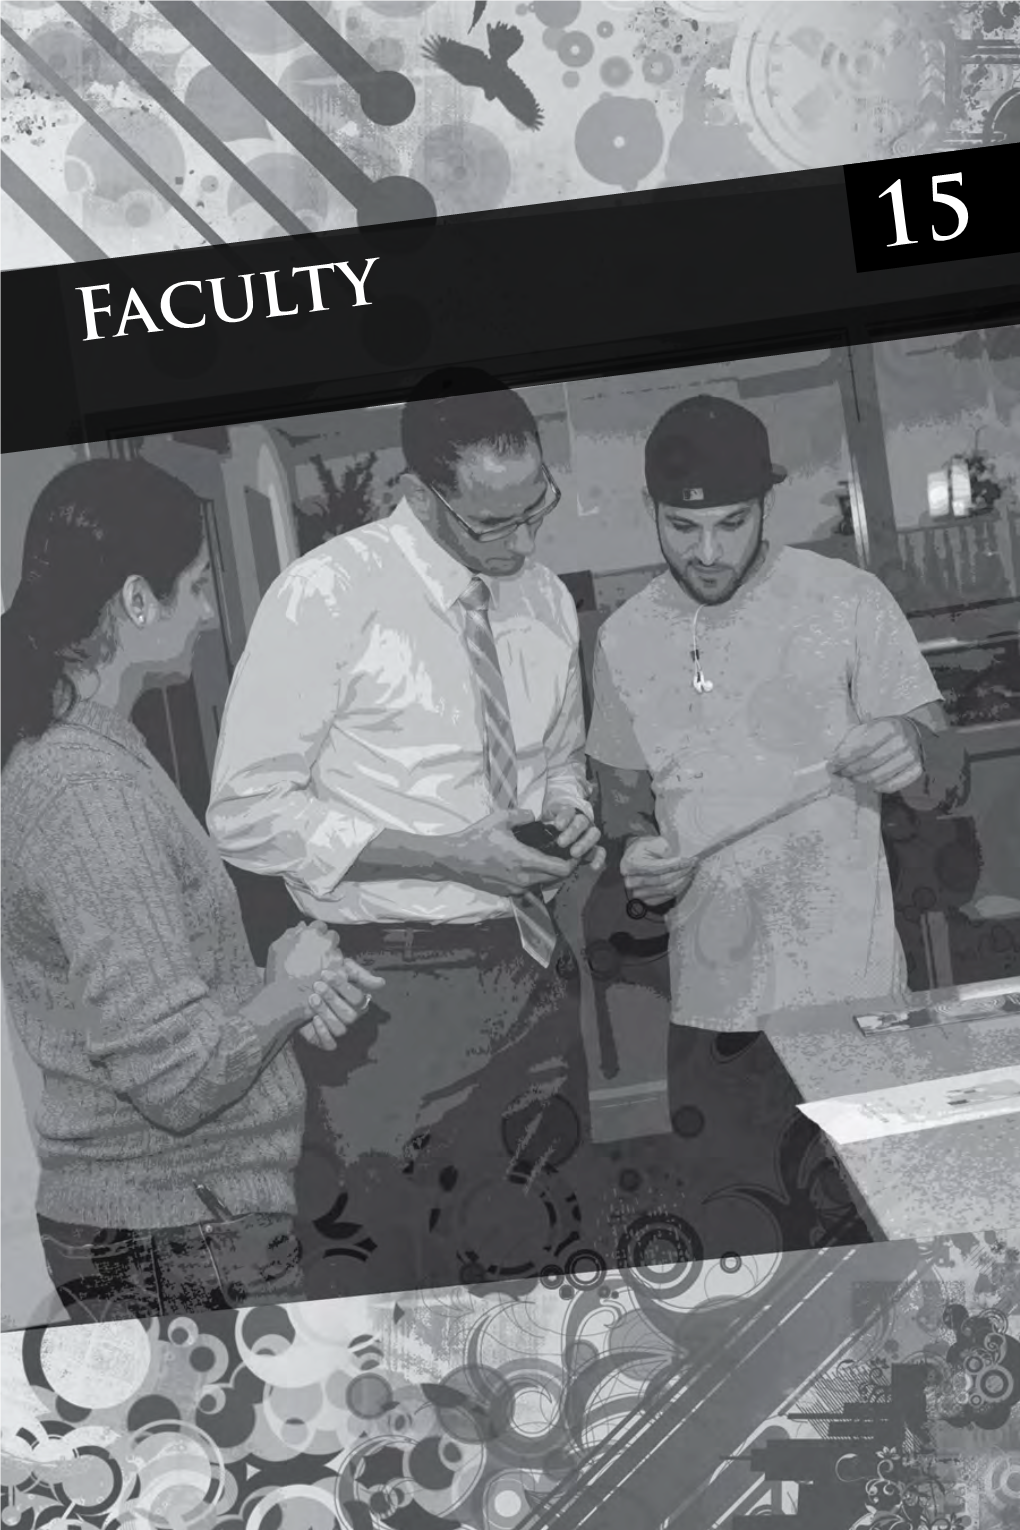 Faculty LIFE UNIVERSITY 2013-2014 ACADEMIC CATALOG